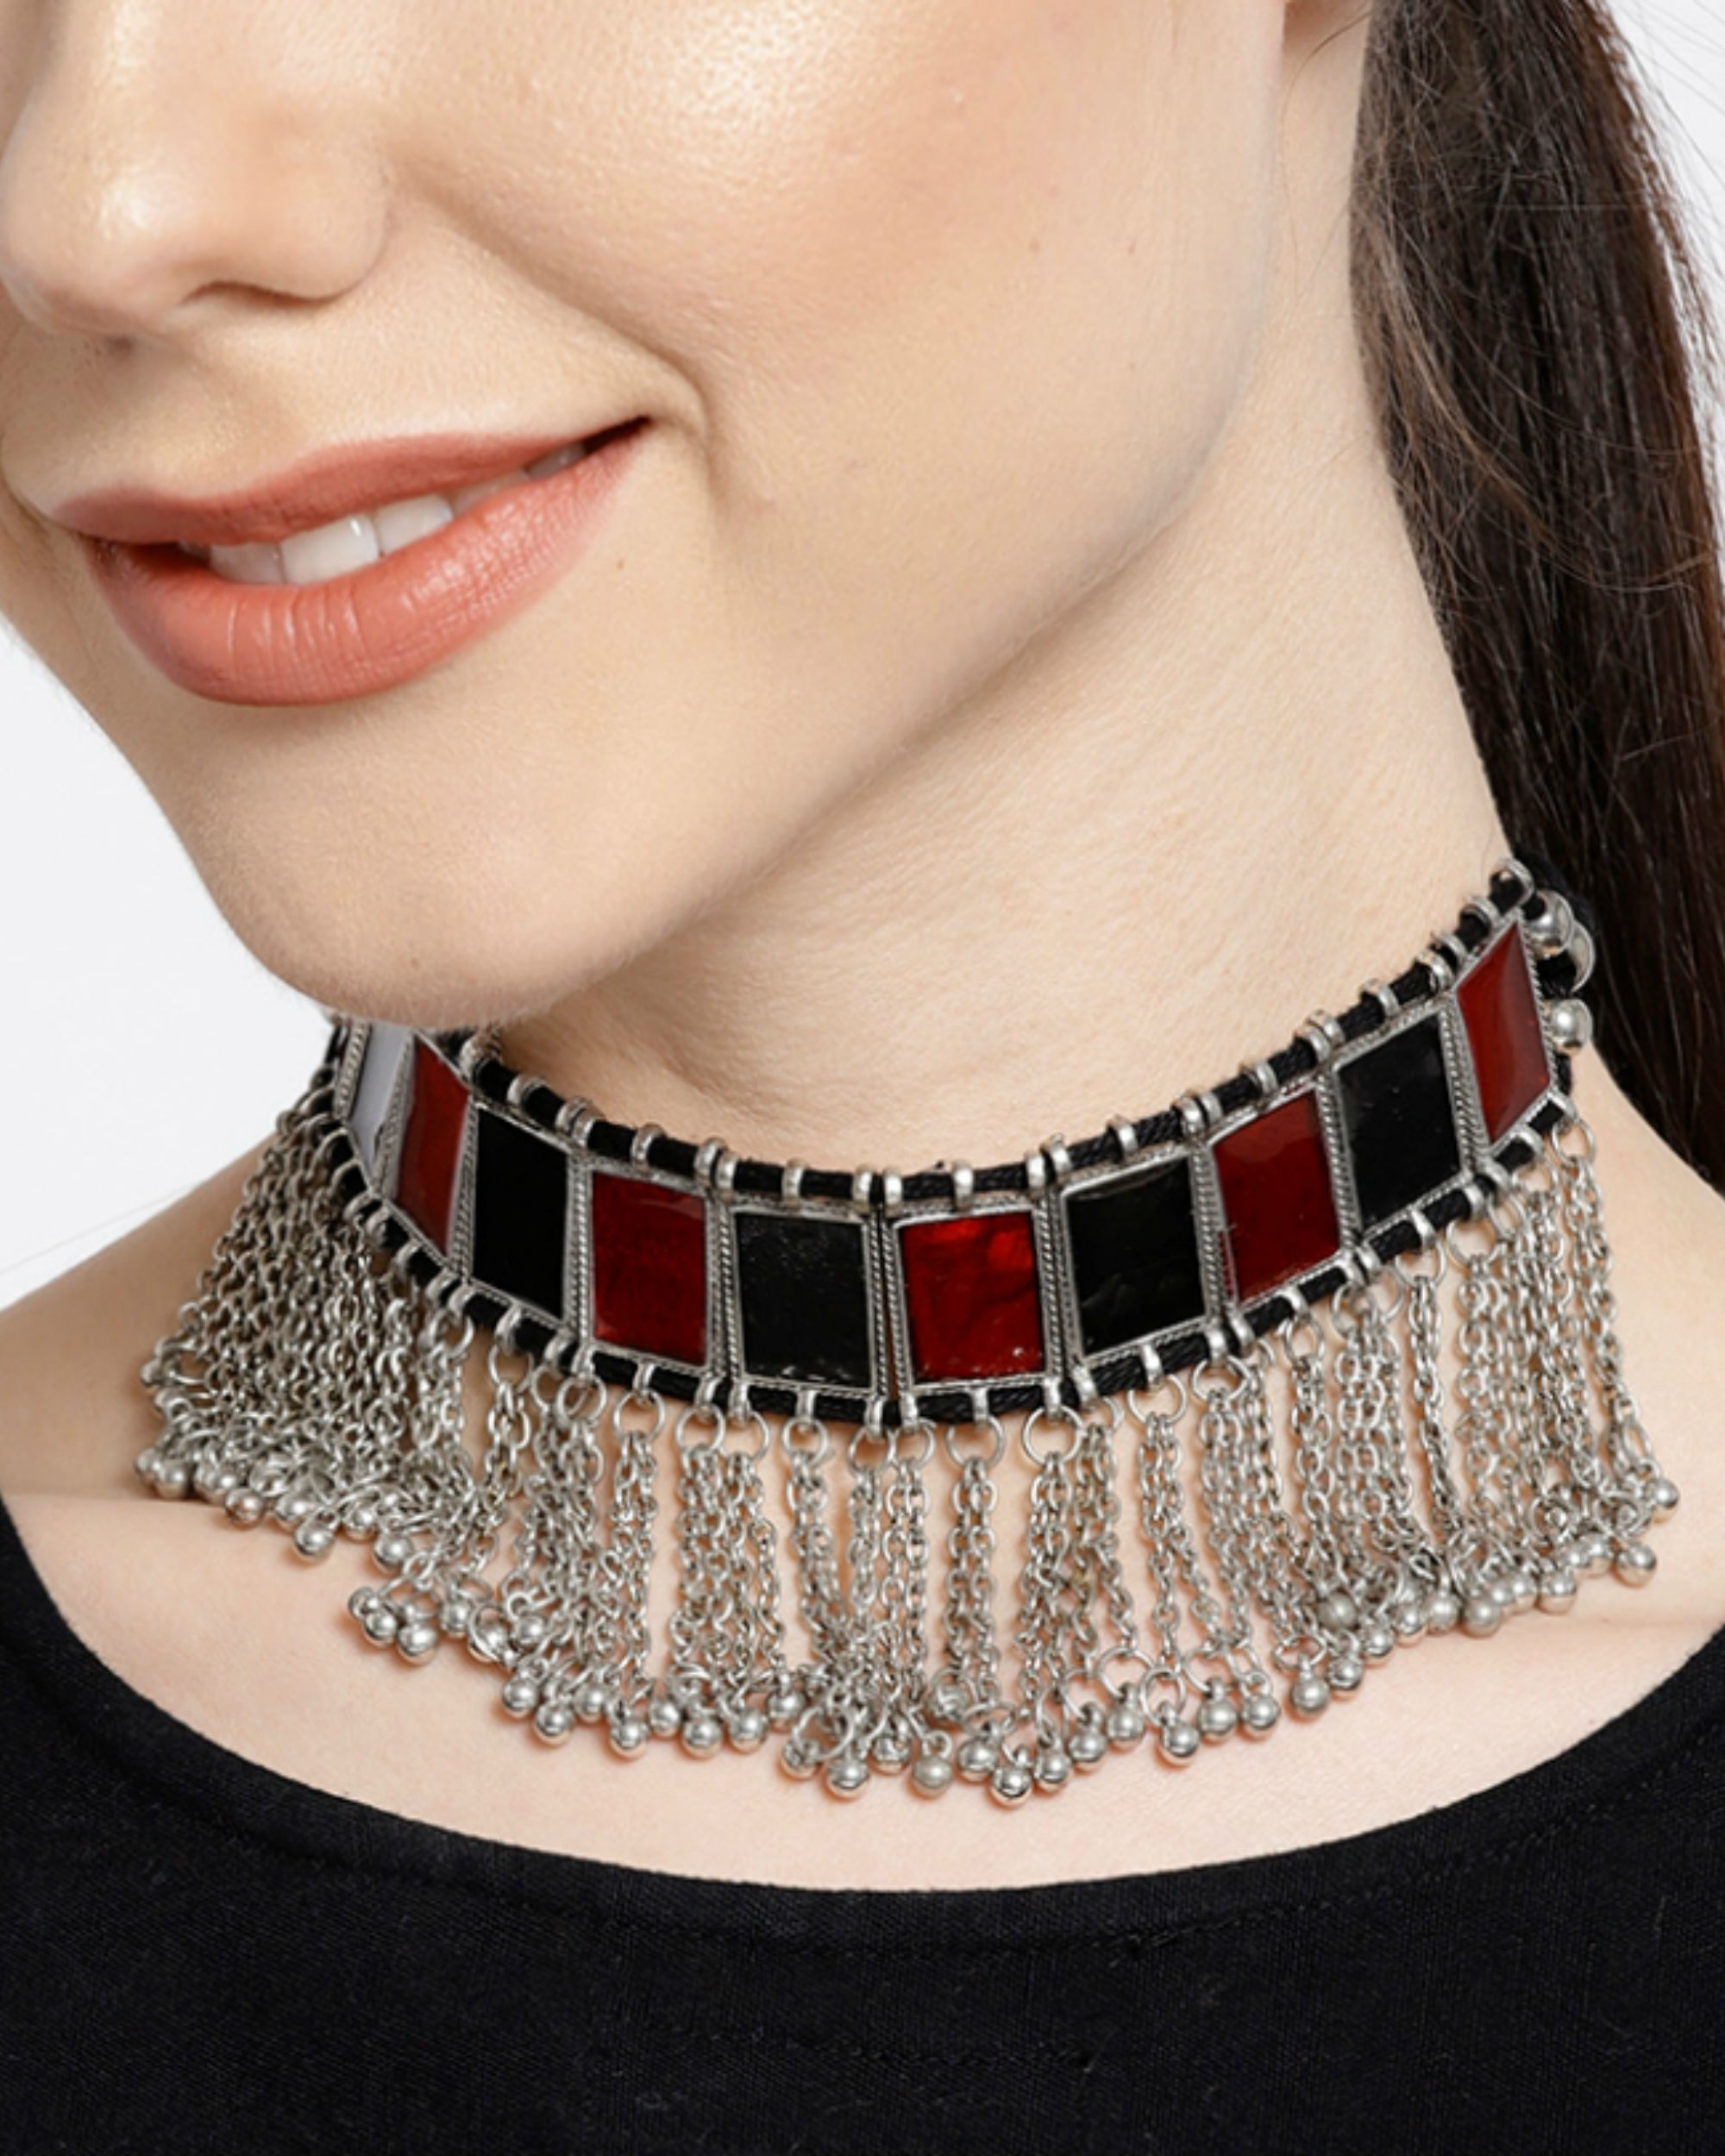 Silver & red choker necklace by Infuzze | The Secret Label